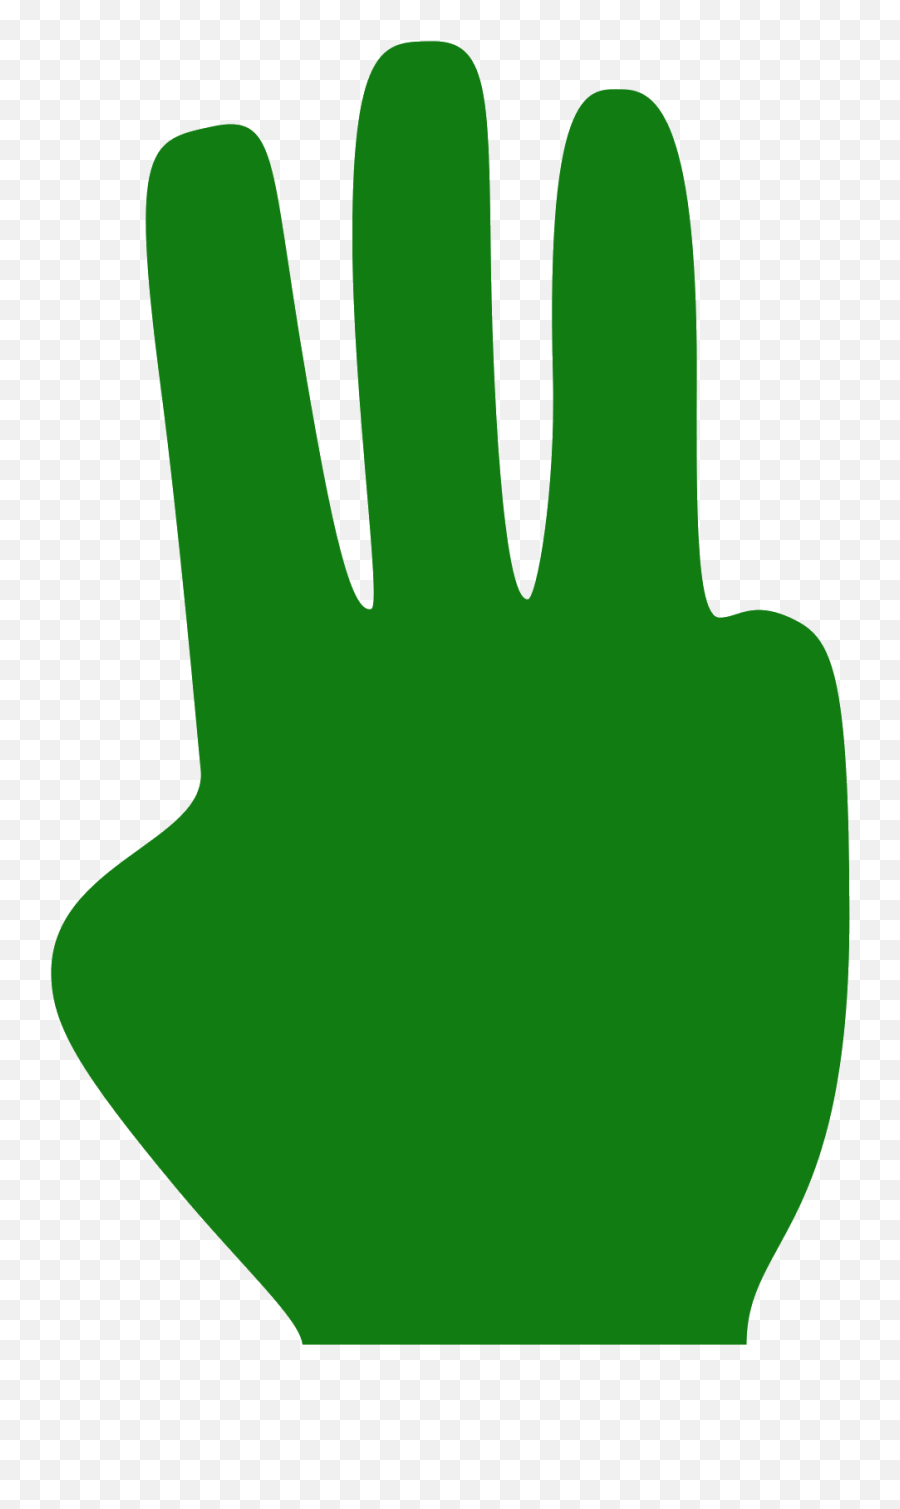 Transparent Stock Three Fingers Icon - Horizontal Emoji,Fingers Crossed Emoji Android